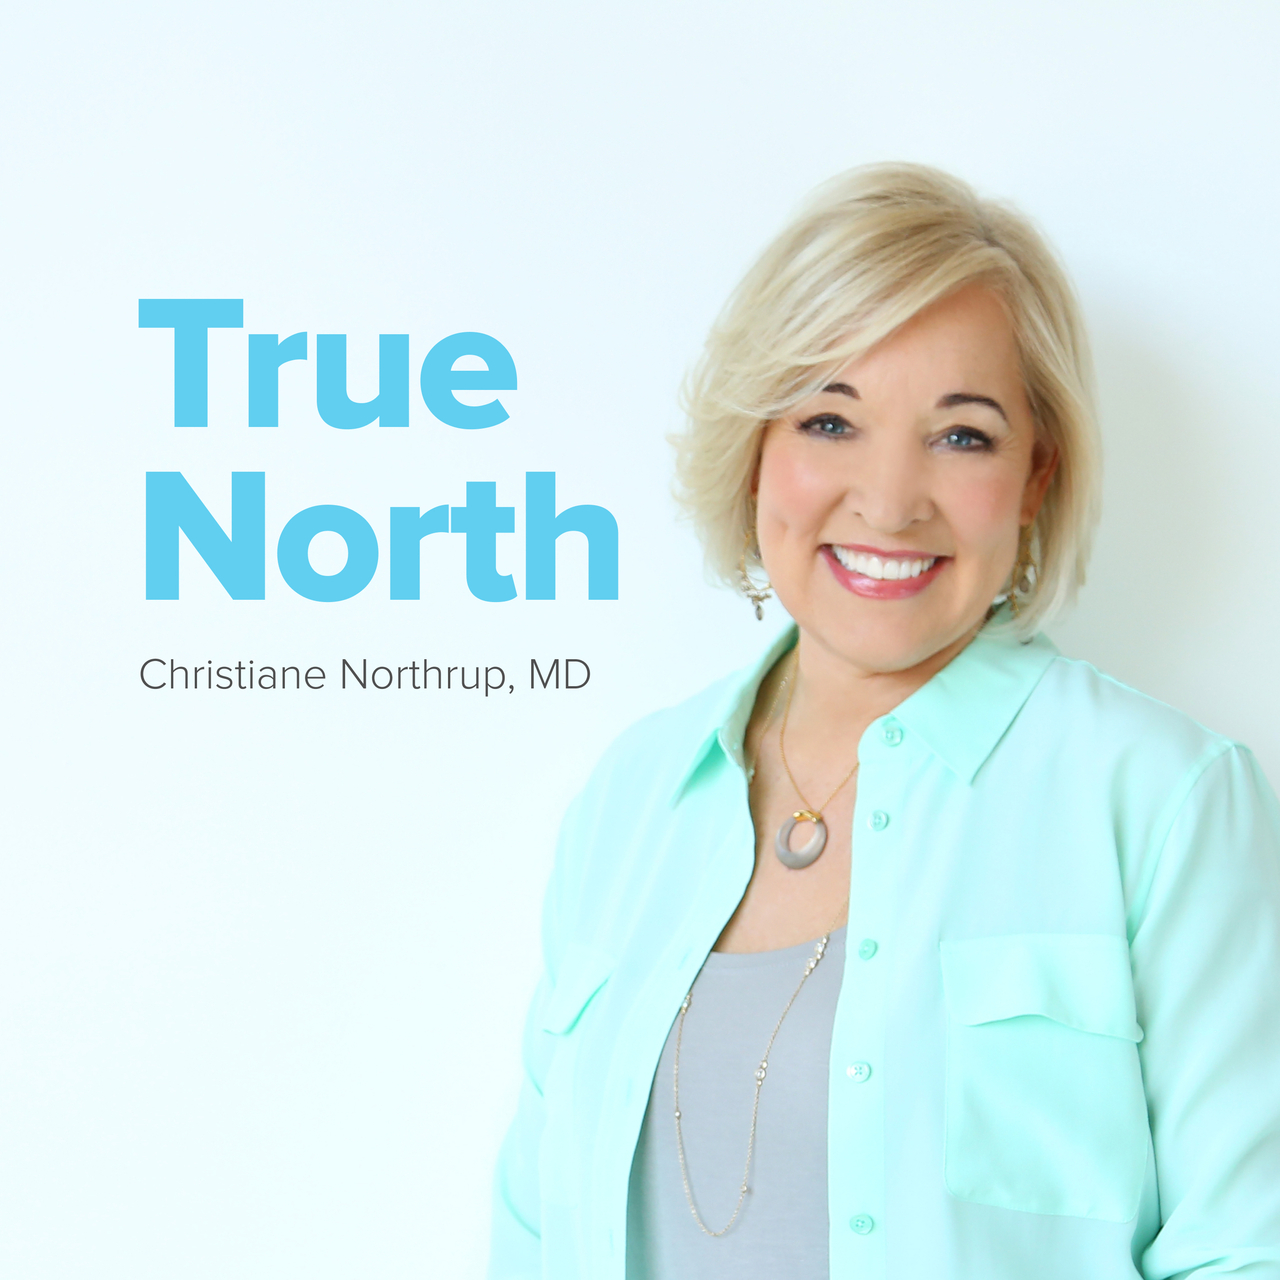 True North by Christiane Northrup, M.D.